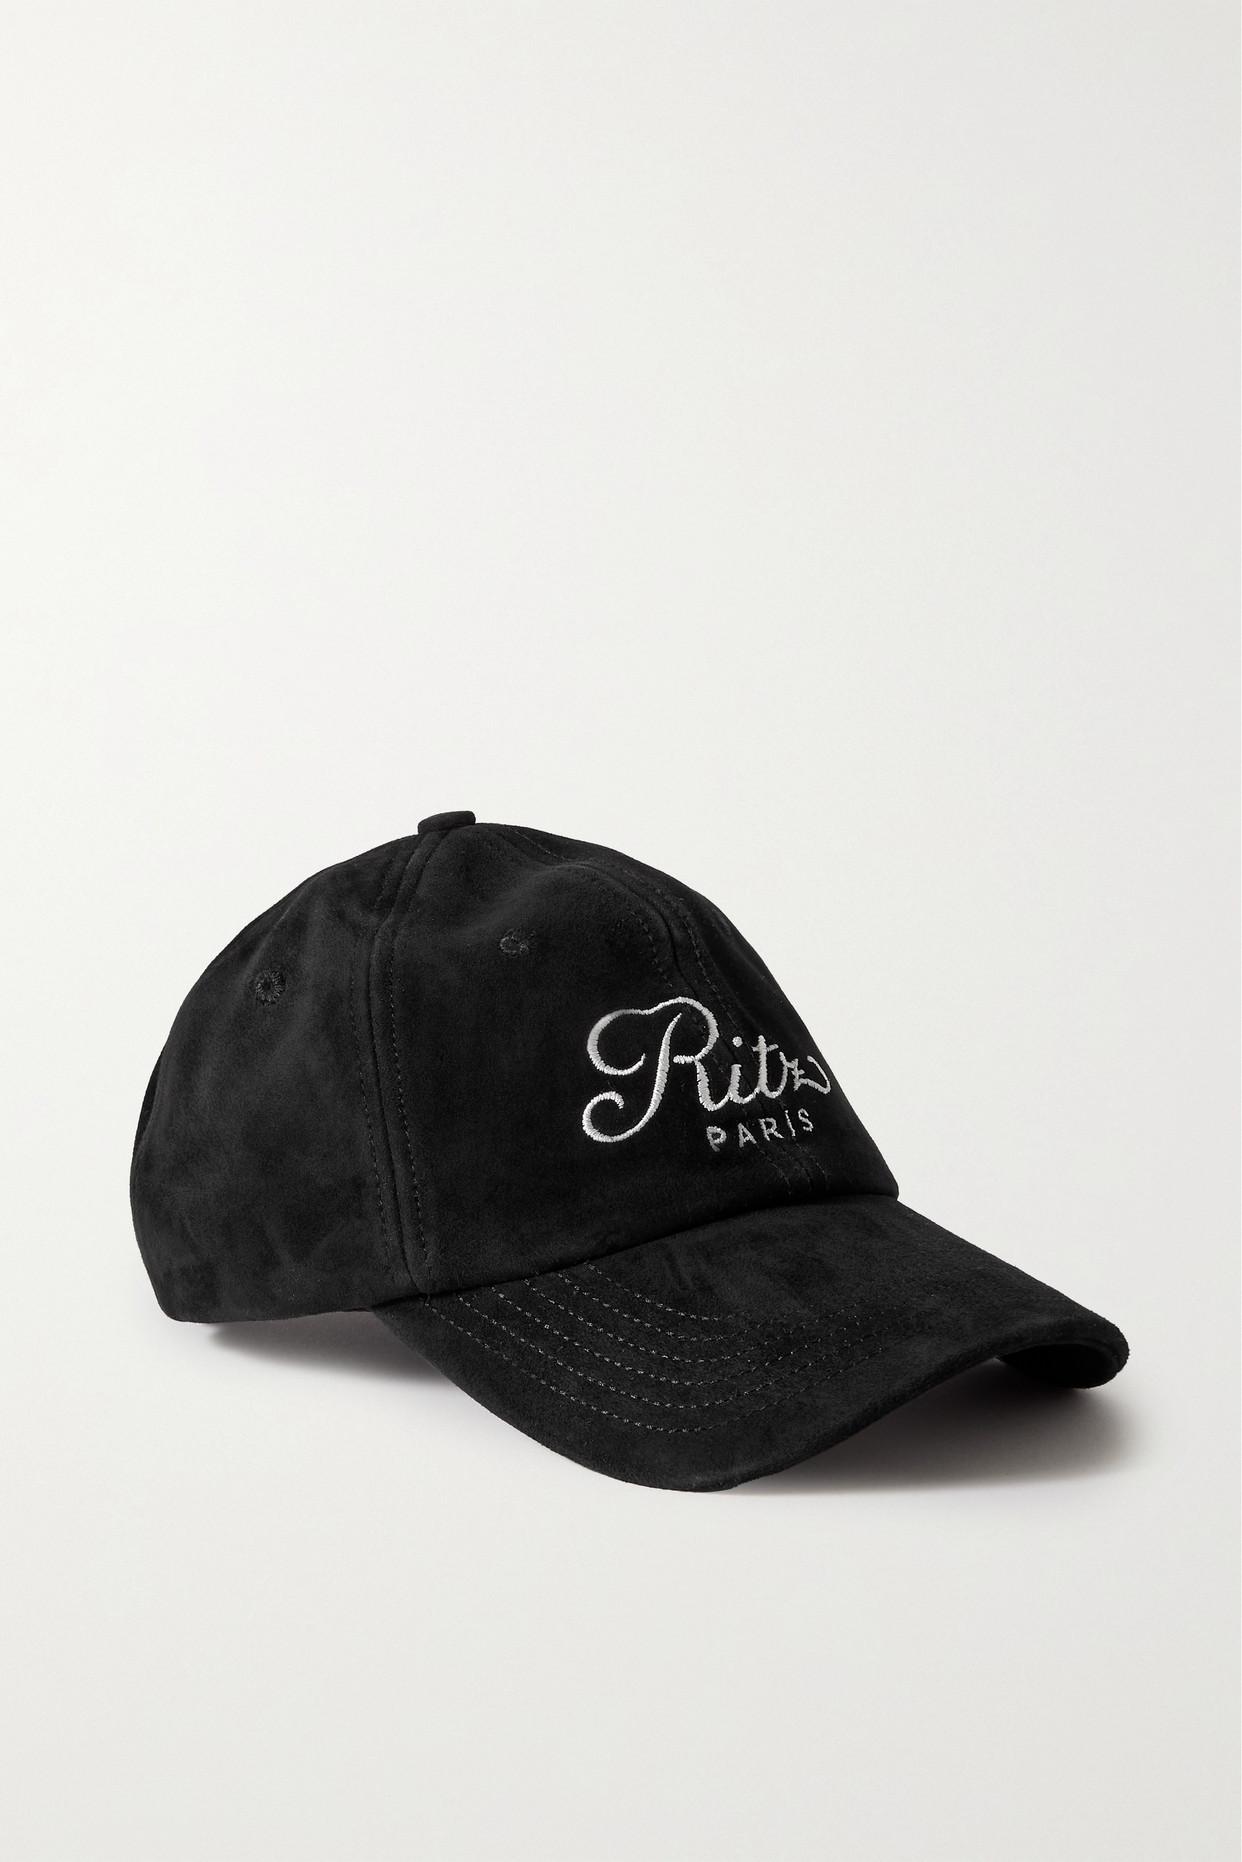 FRAME + Ritz Paris Embroidered Suede Baseball Cap in Black